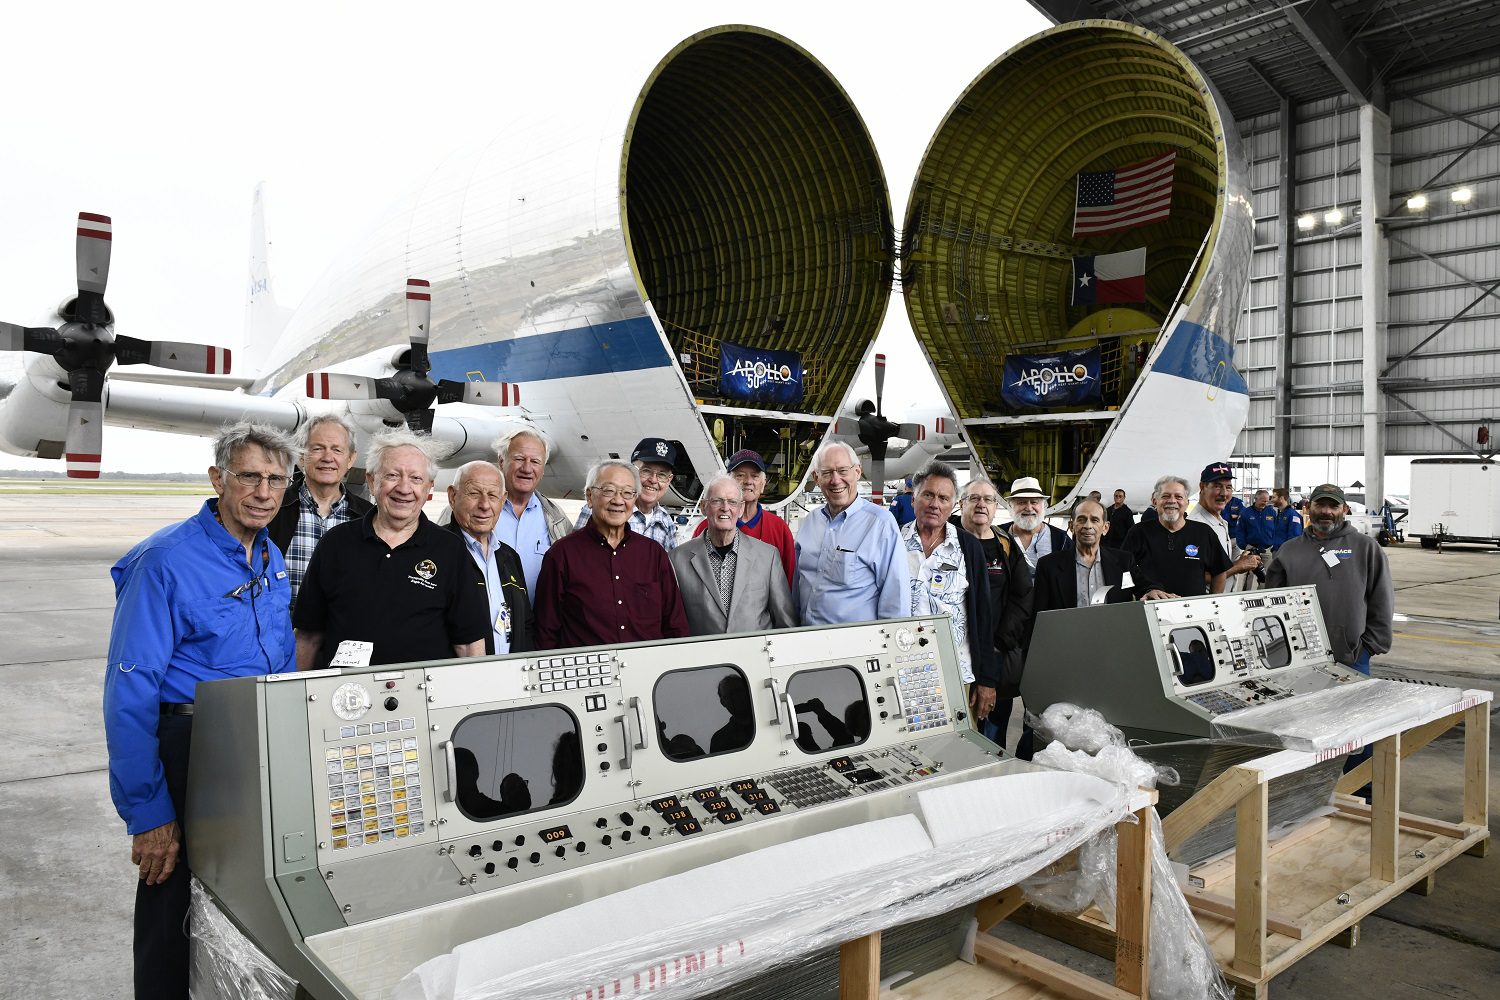 Apollo Legends Reunite, Restored Historic Mission Control Unveiled